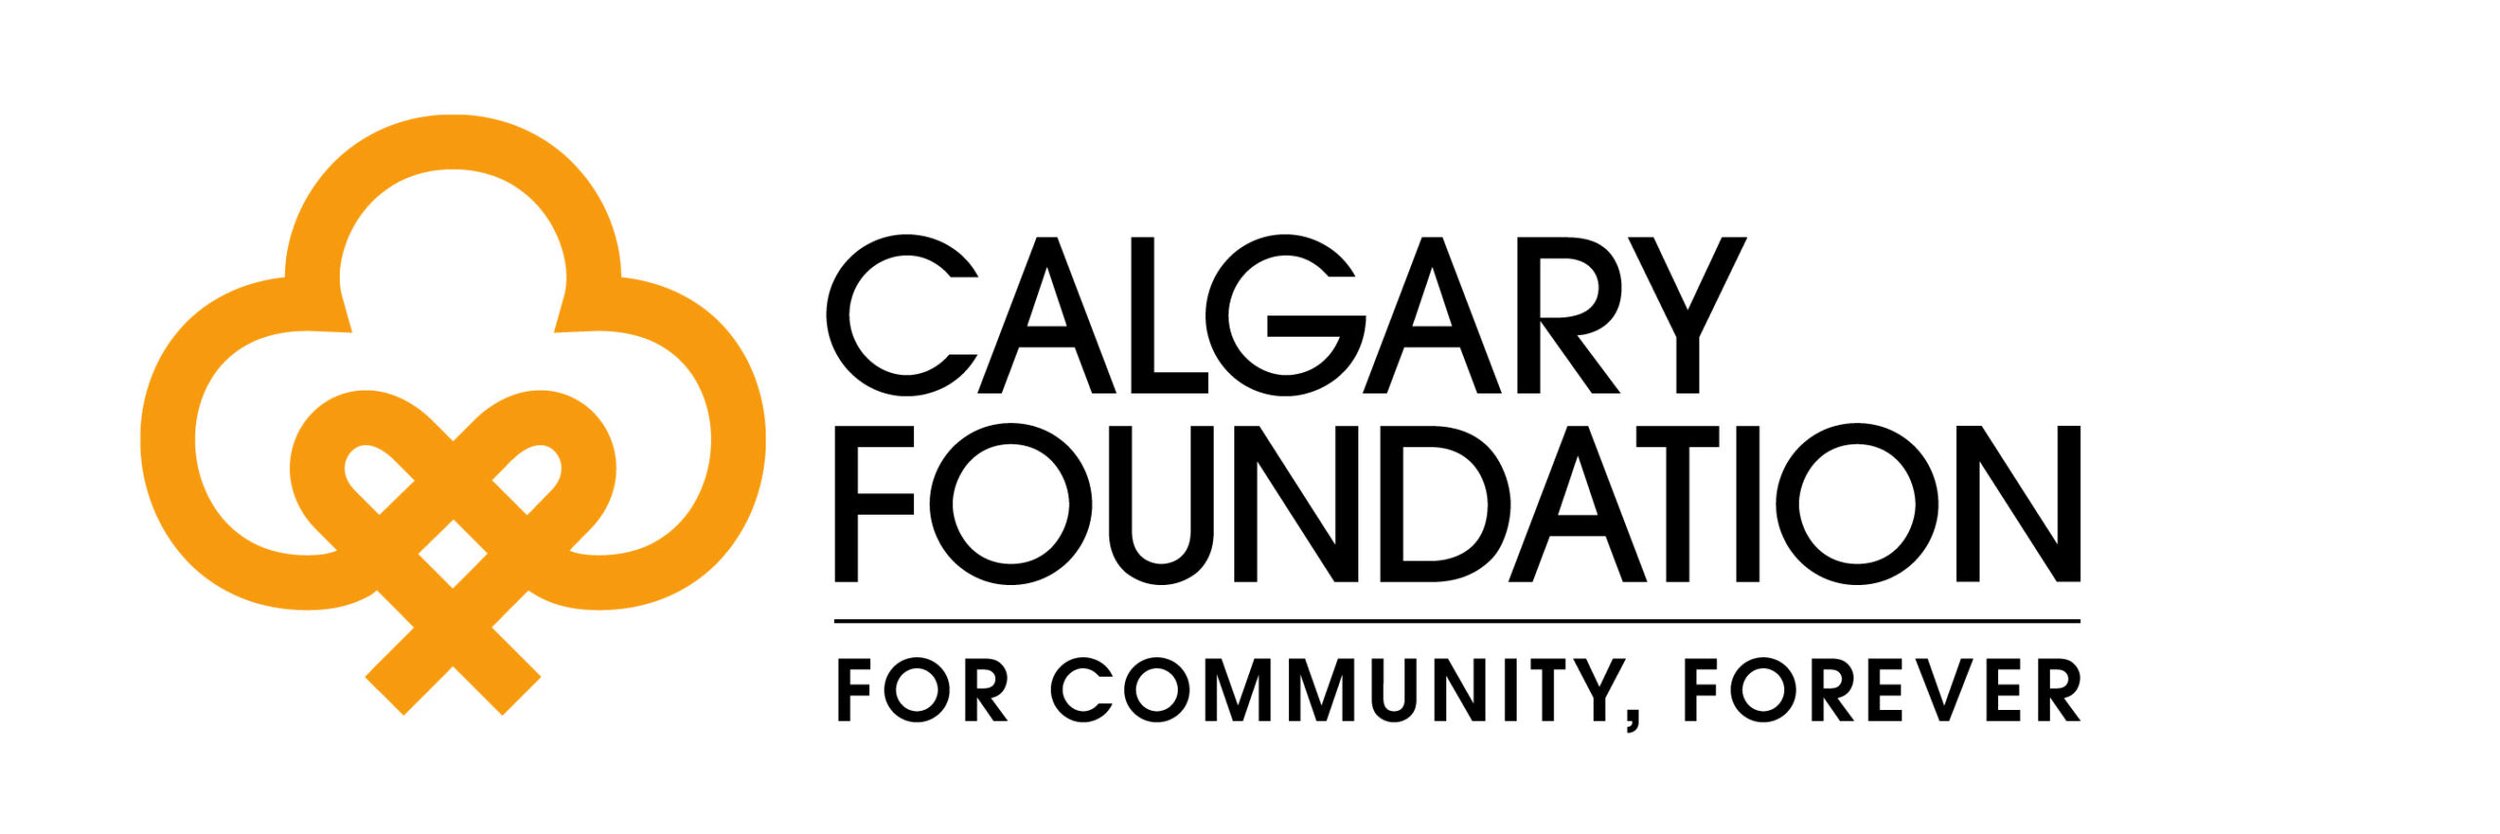 Calgary-Foundation-scaled.jpg